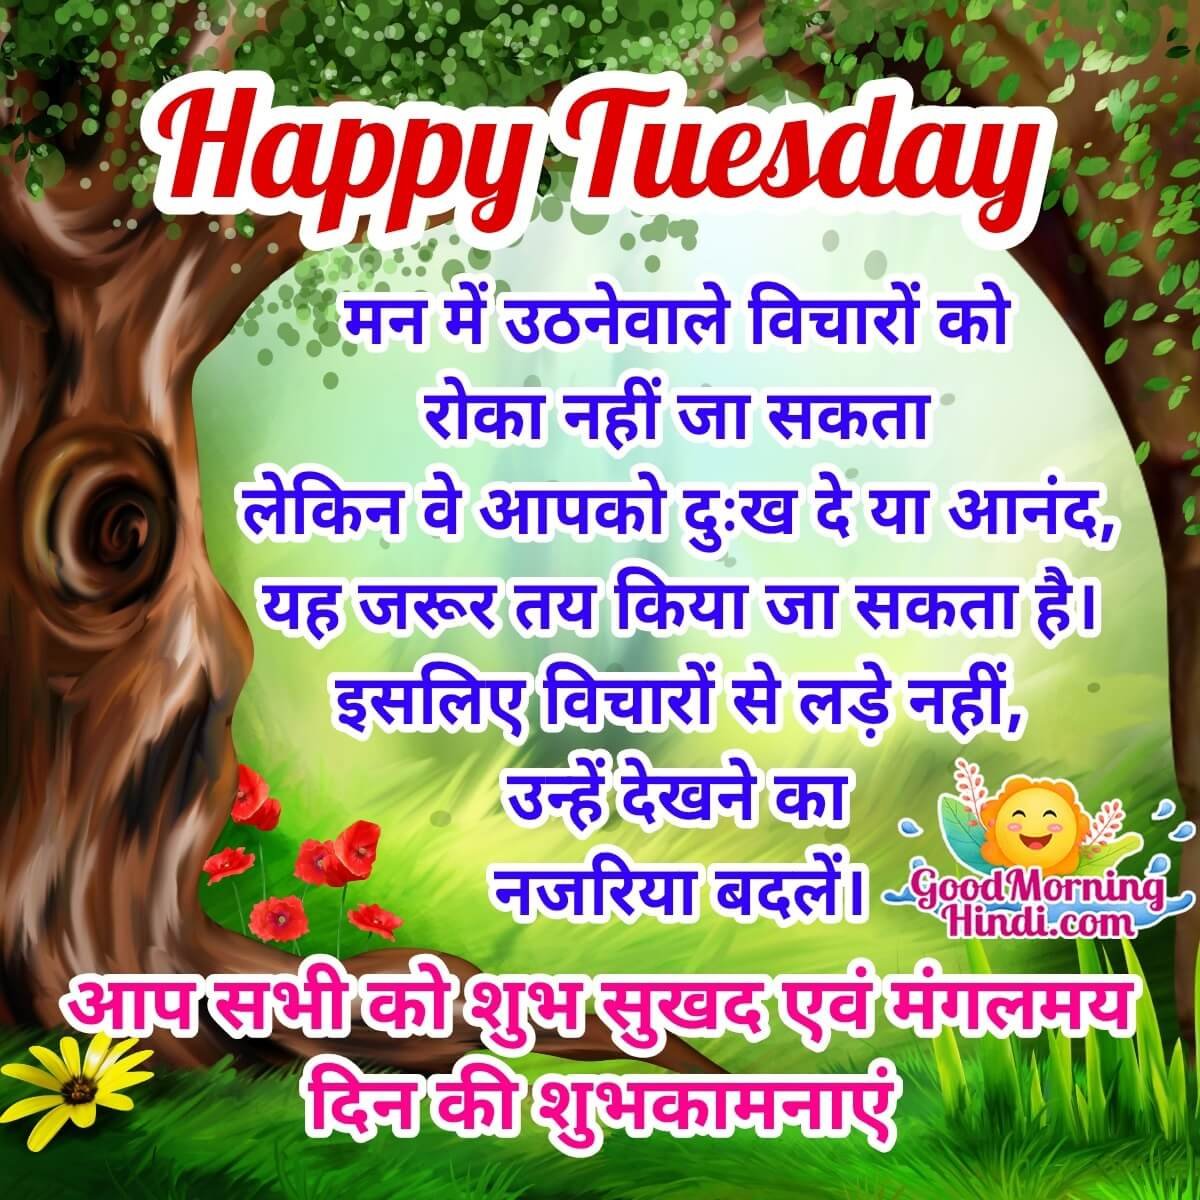 Happy Tuesday Hindi Message